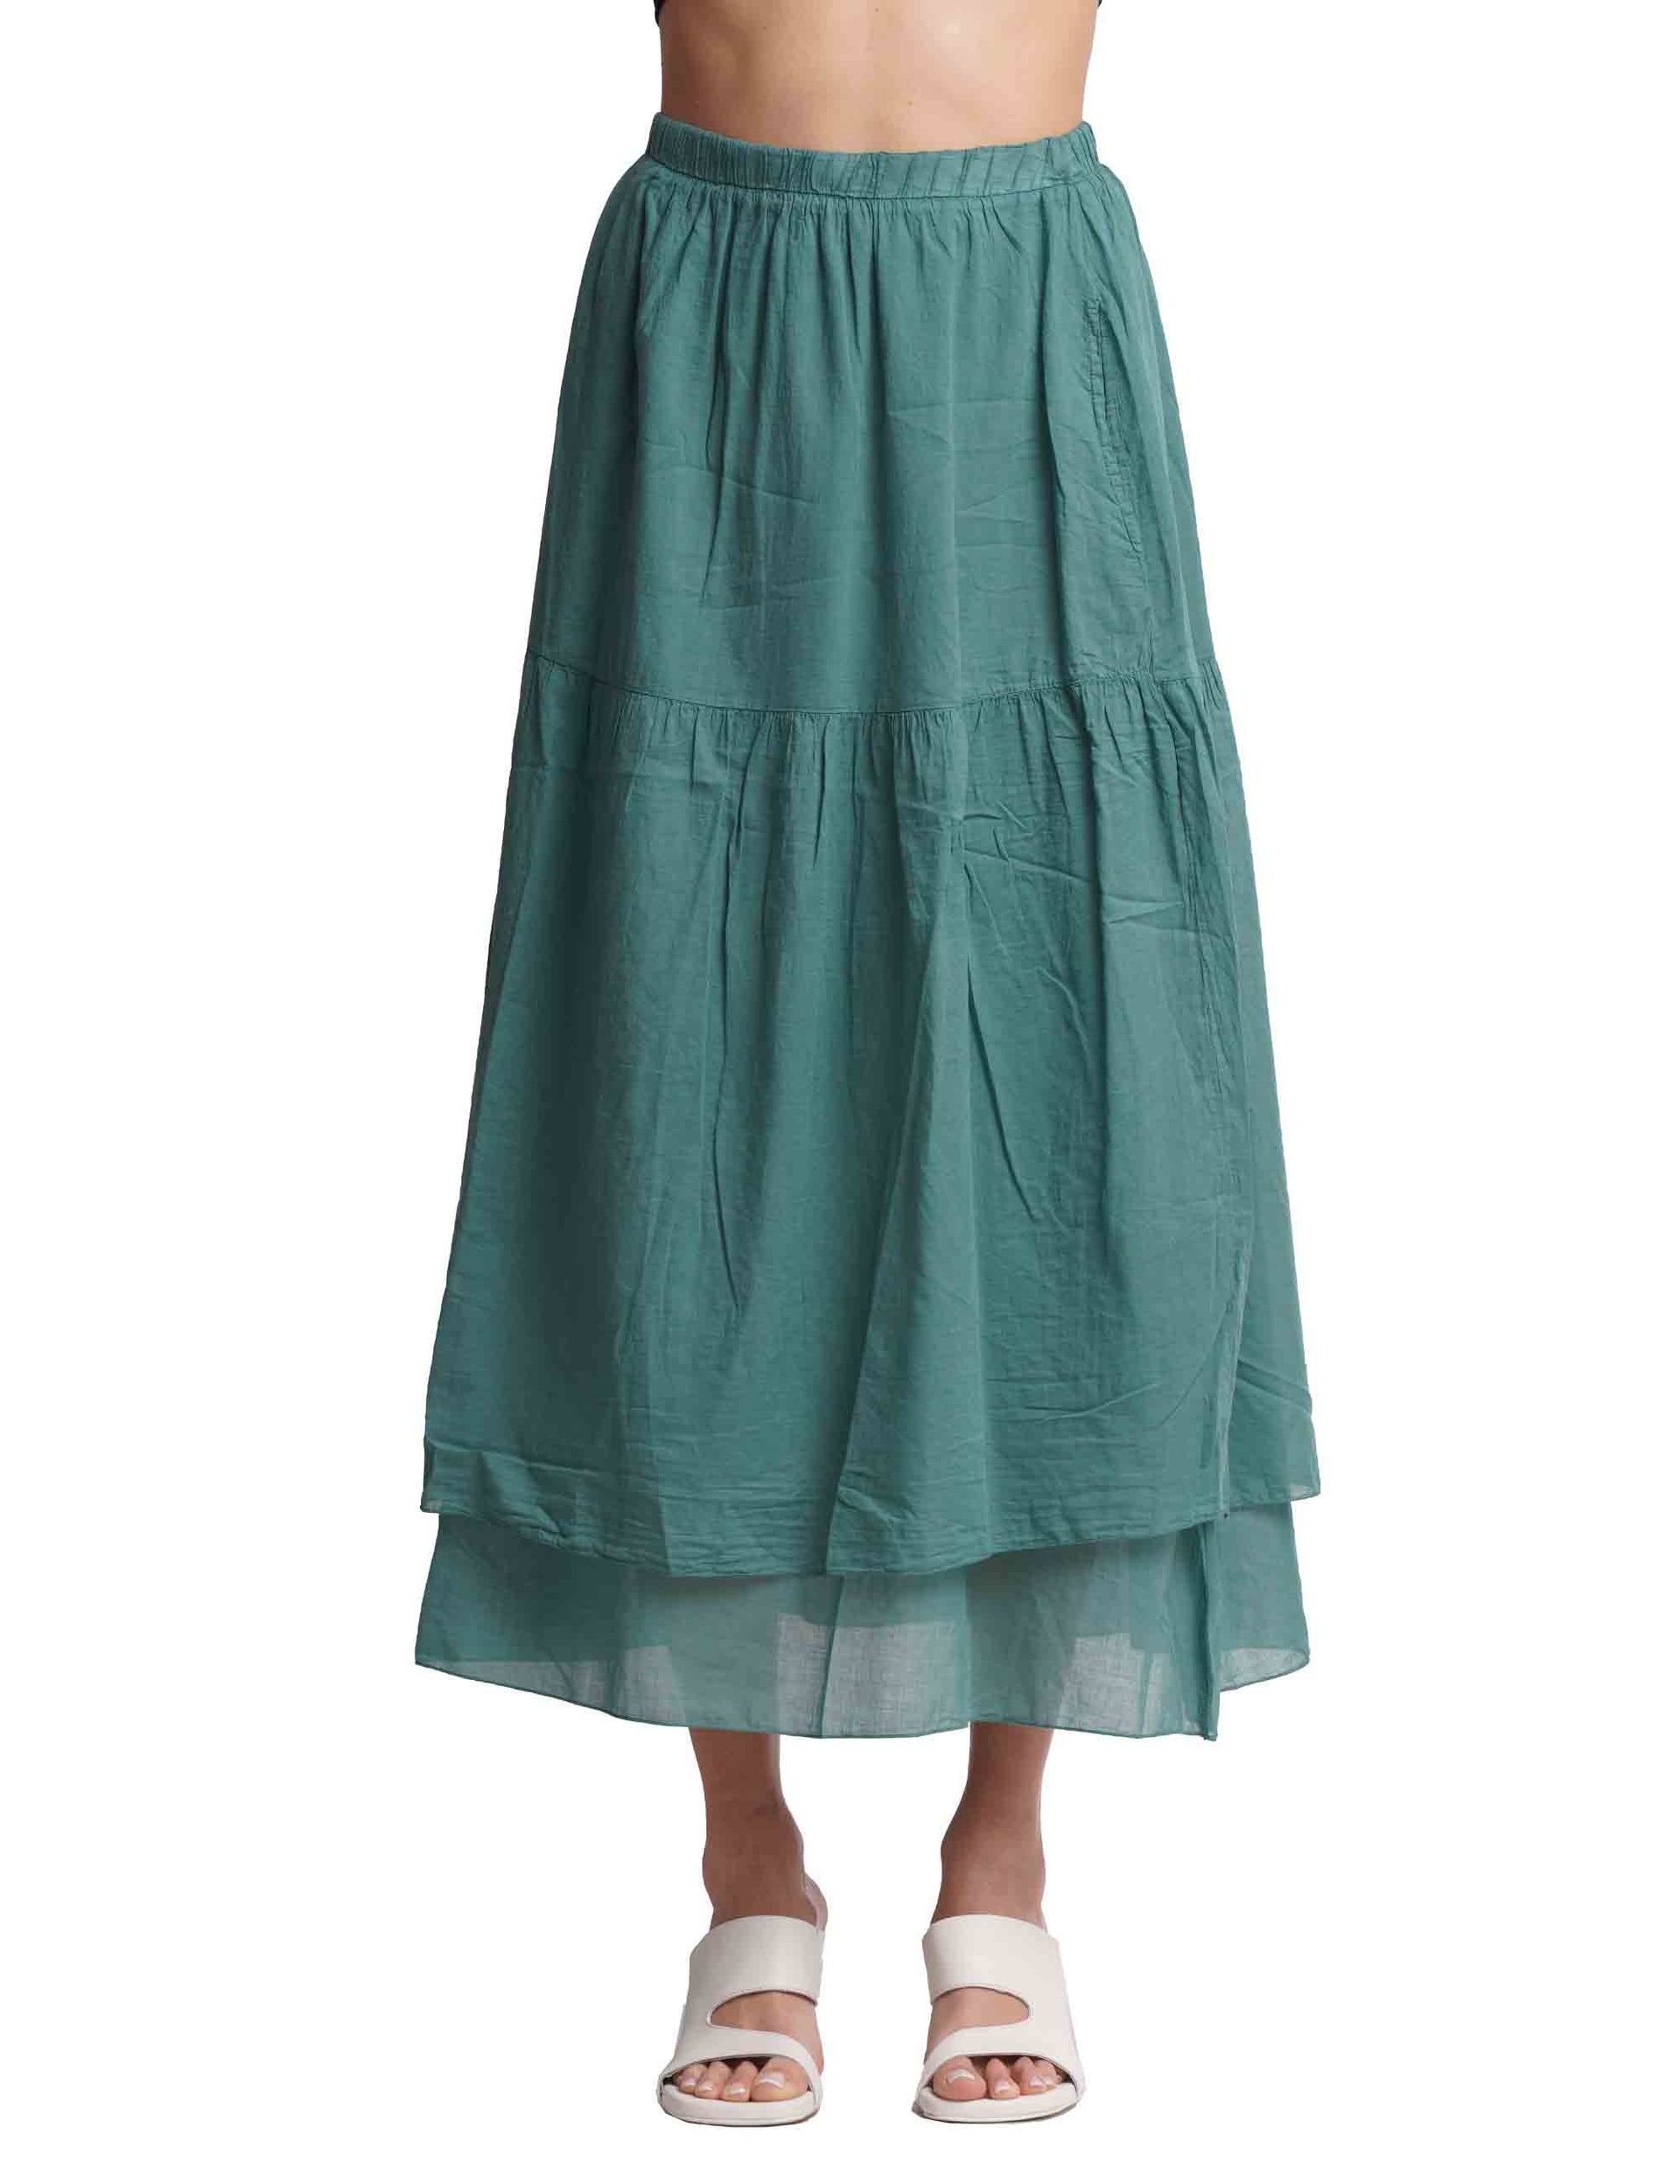 Long women's skirts in green cotton